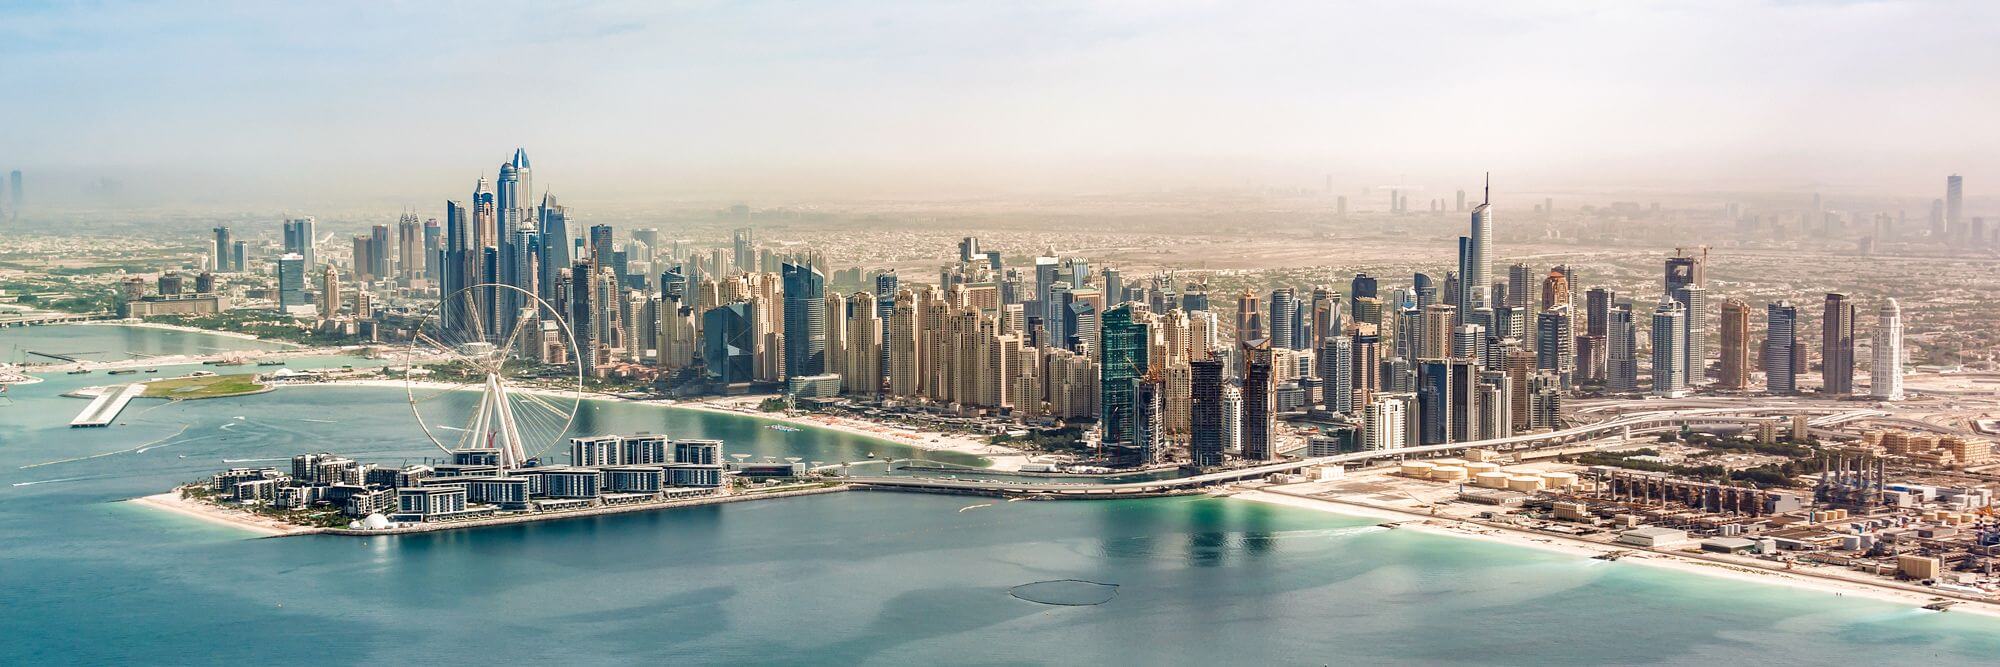 Dubai real estate market offer many opportunities for invertors